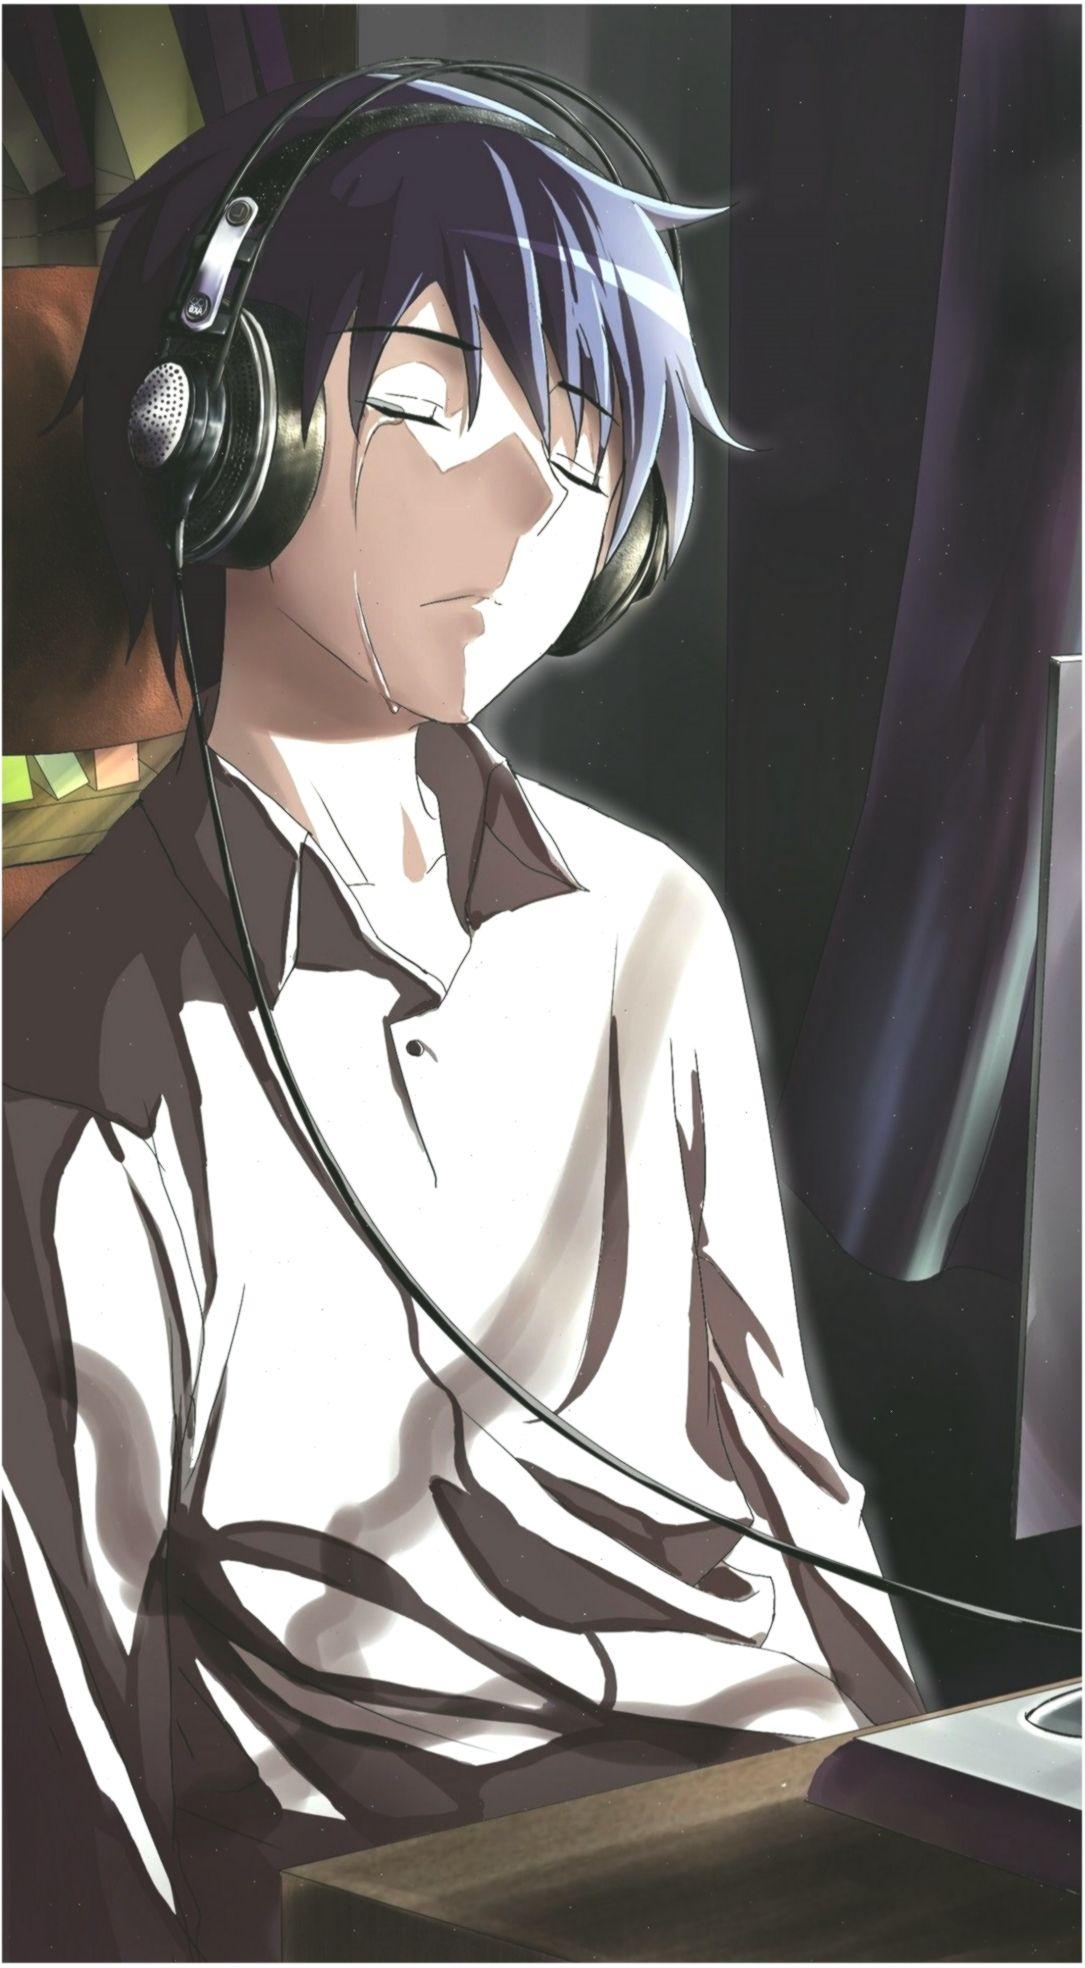 Sad Anime Boy Pfp : Depressed Anime Boy Wallpapers Top Free Depressed